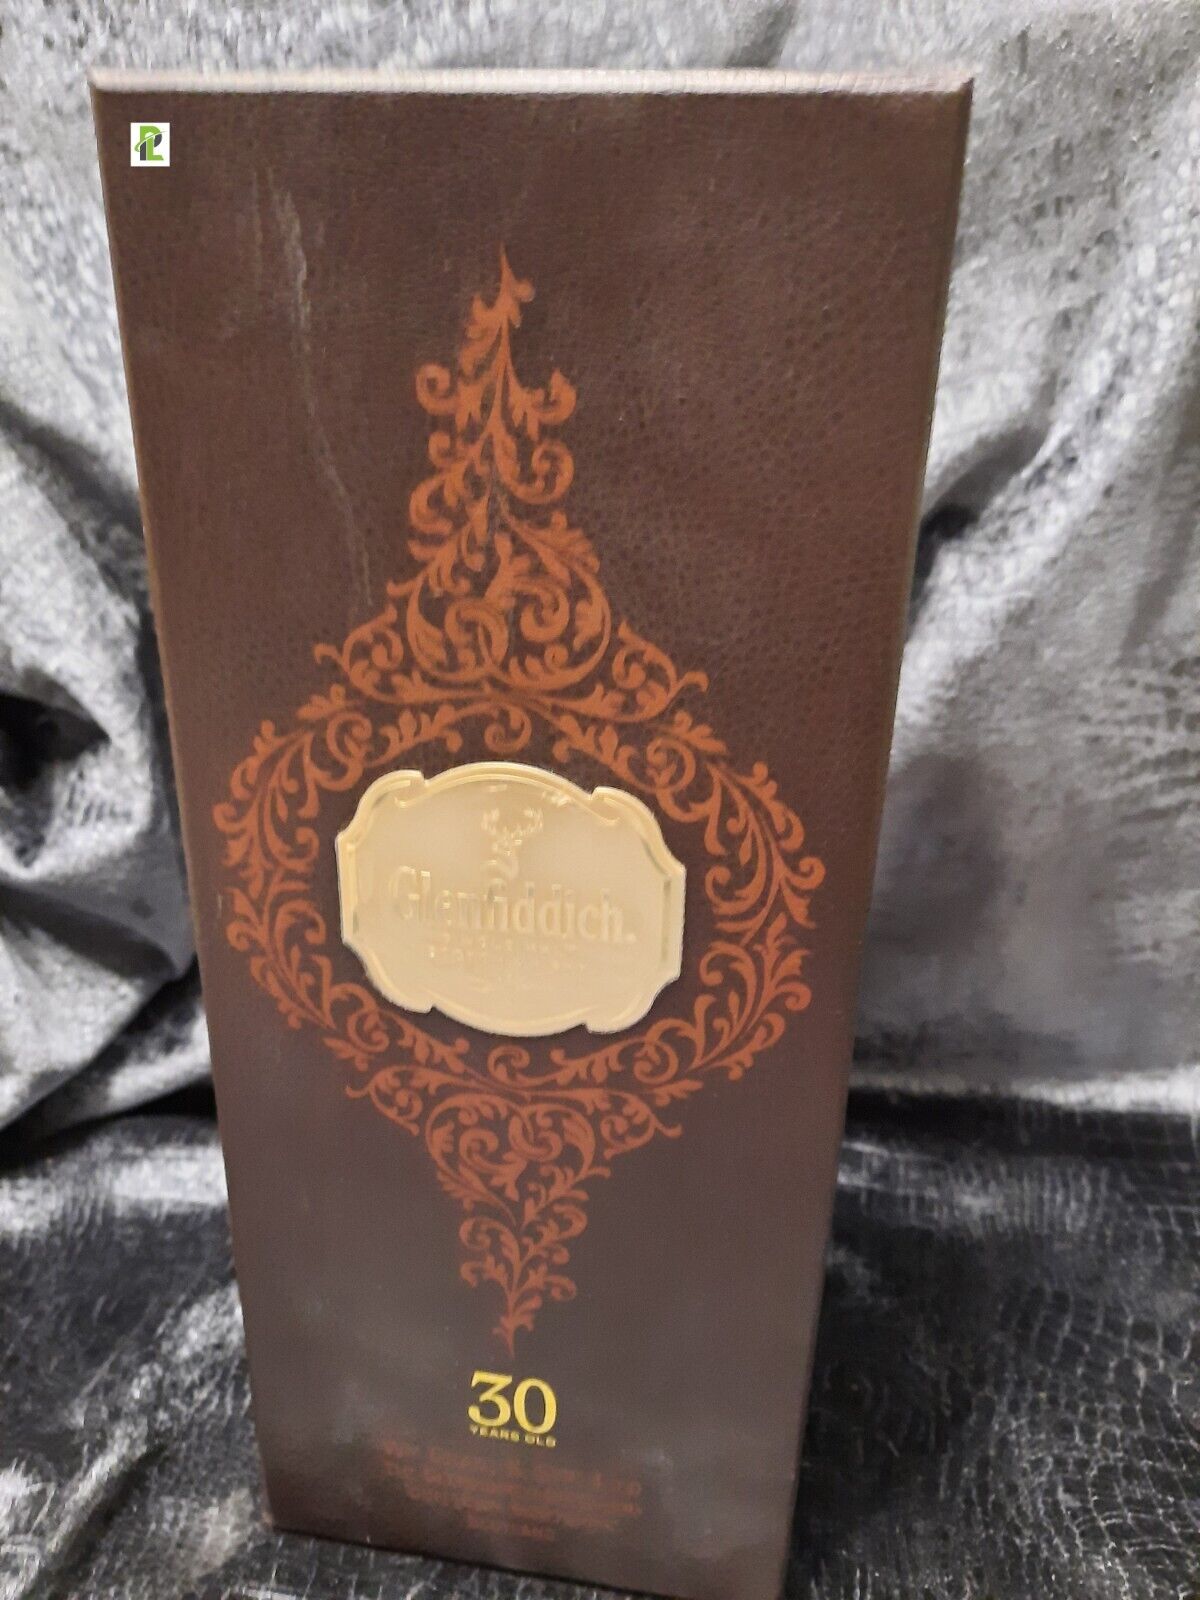 Glenfiddich 30 Year Single Malt Scotch Leather collectors Box + Booklet